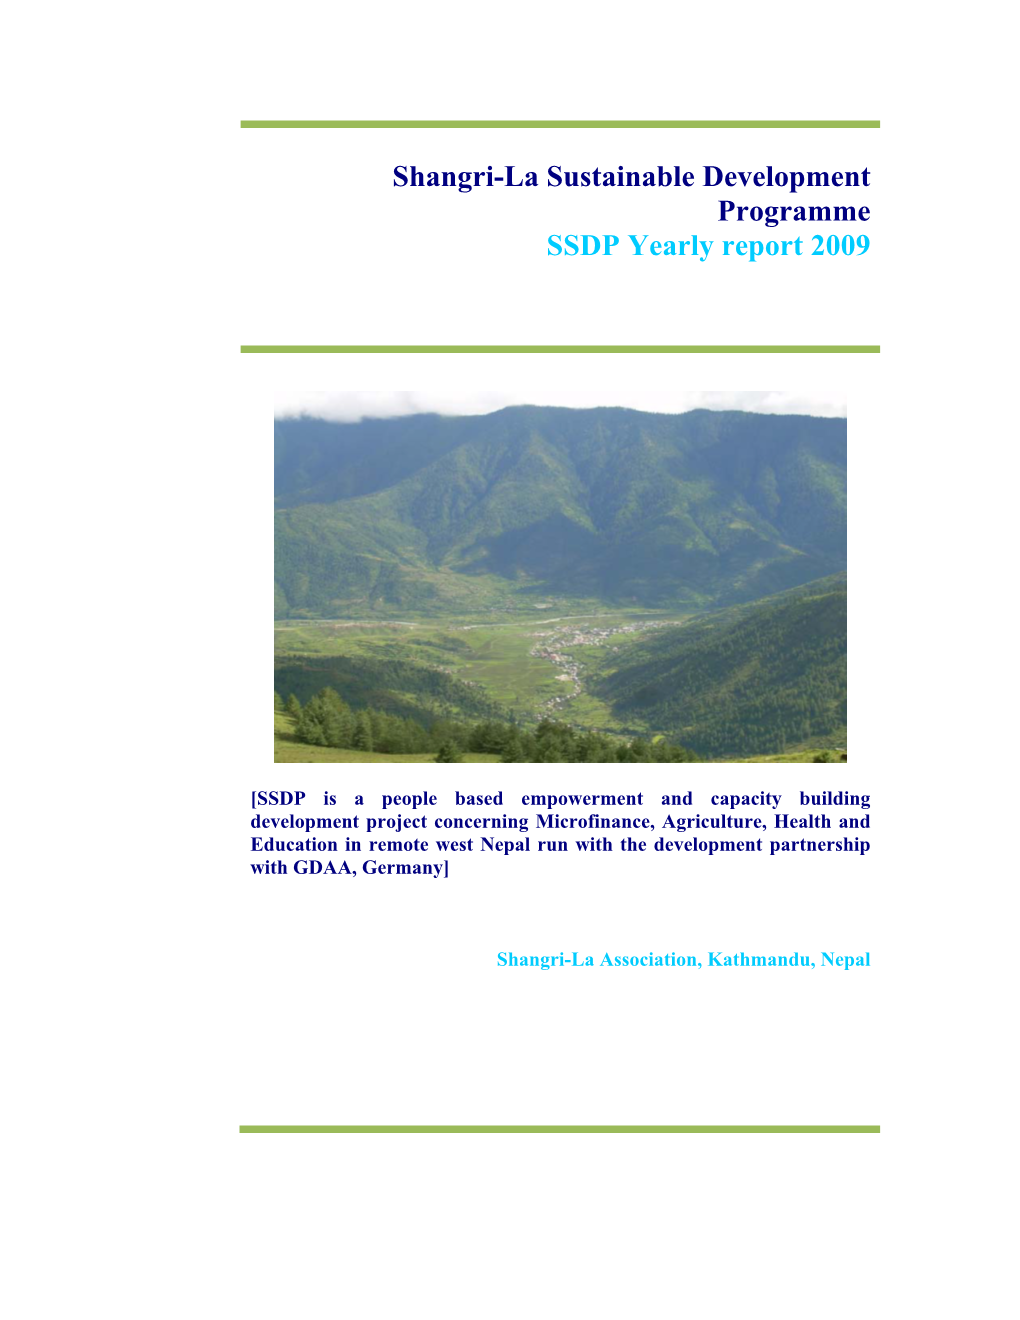 Shangri-La Sustainable Development Programme SSDP Yearly Report 2009